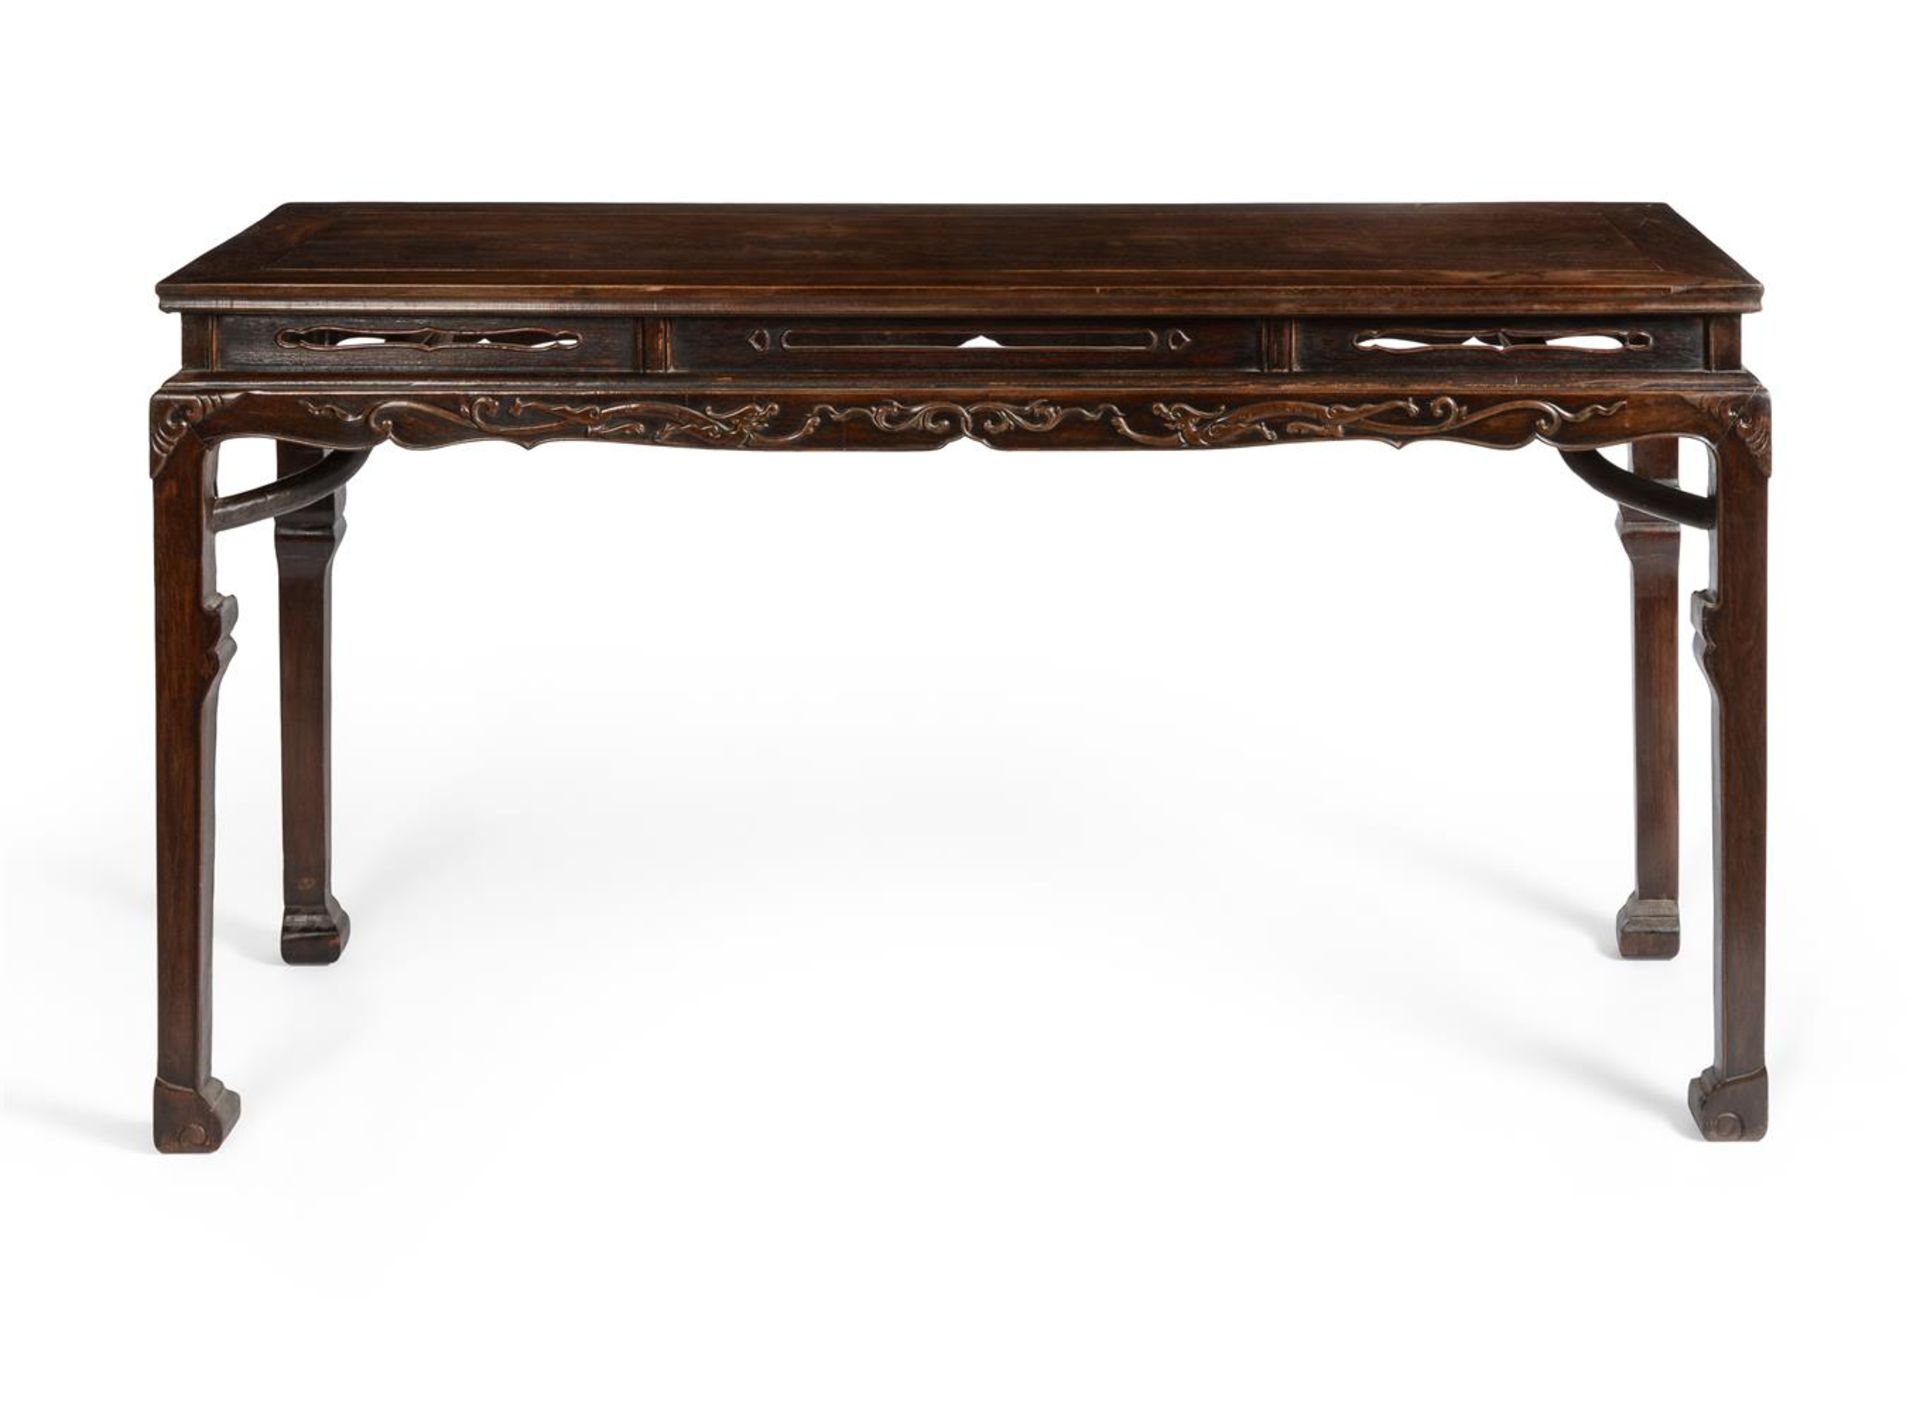 A large Chinese ironwood table